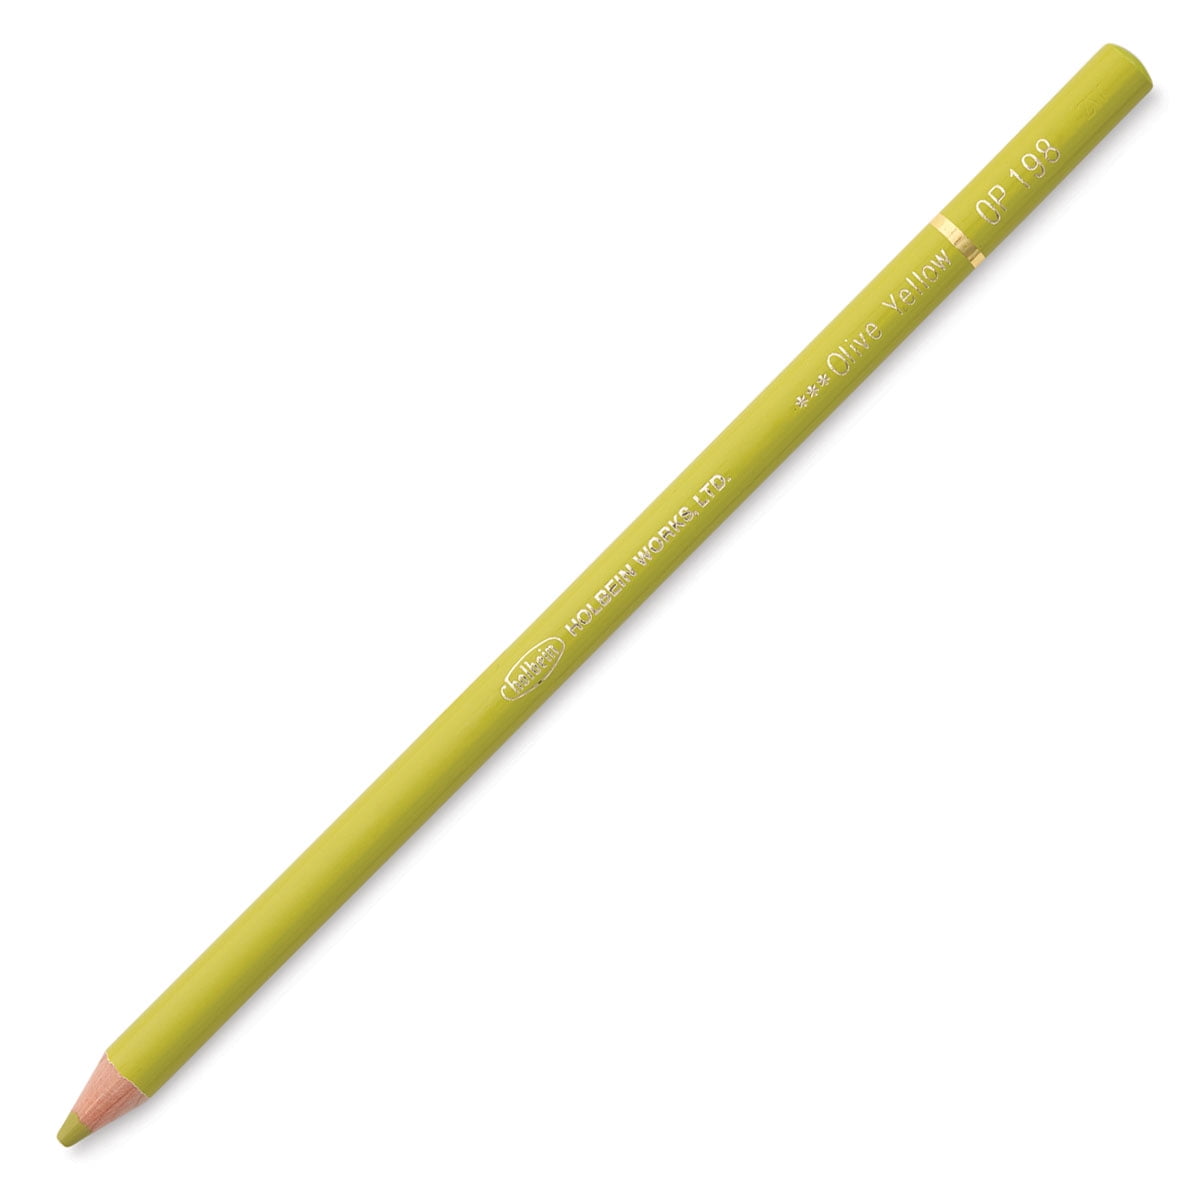 Scentco Colored Smencils - Gourmet Scented Coloring Pencils, 10 Count